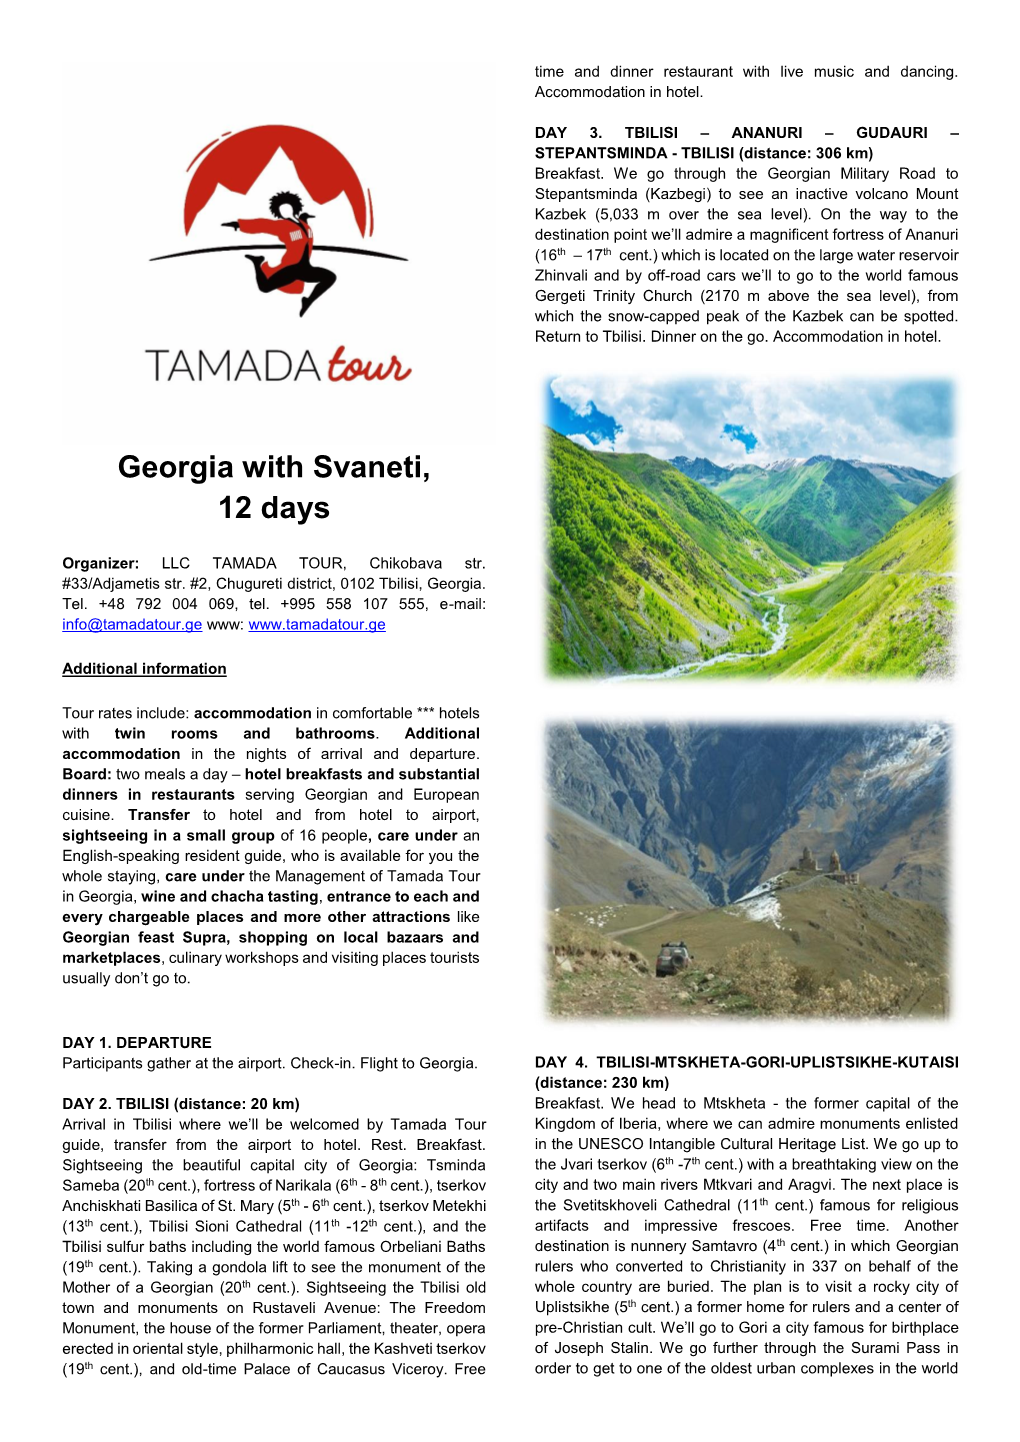 Georgia with Svaneti, 12 Days